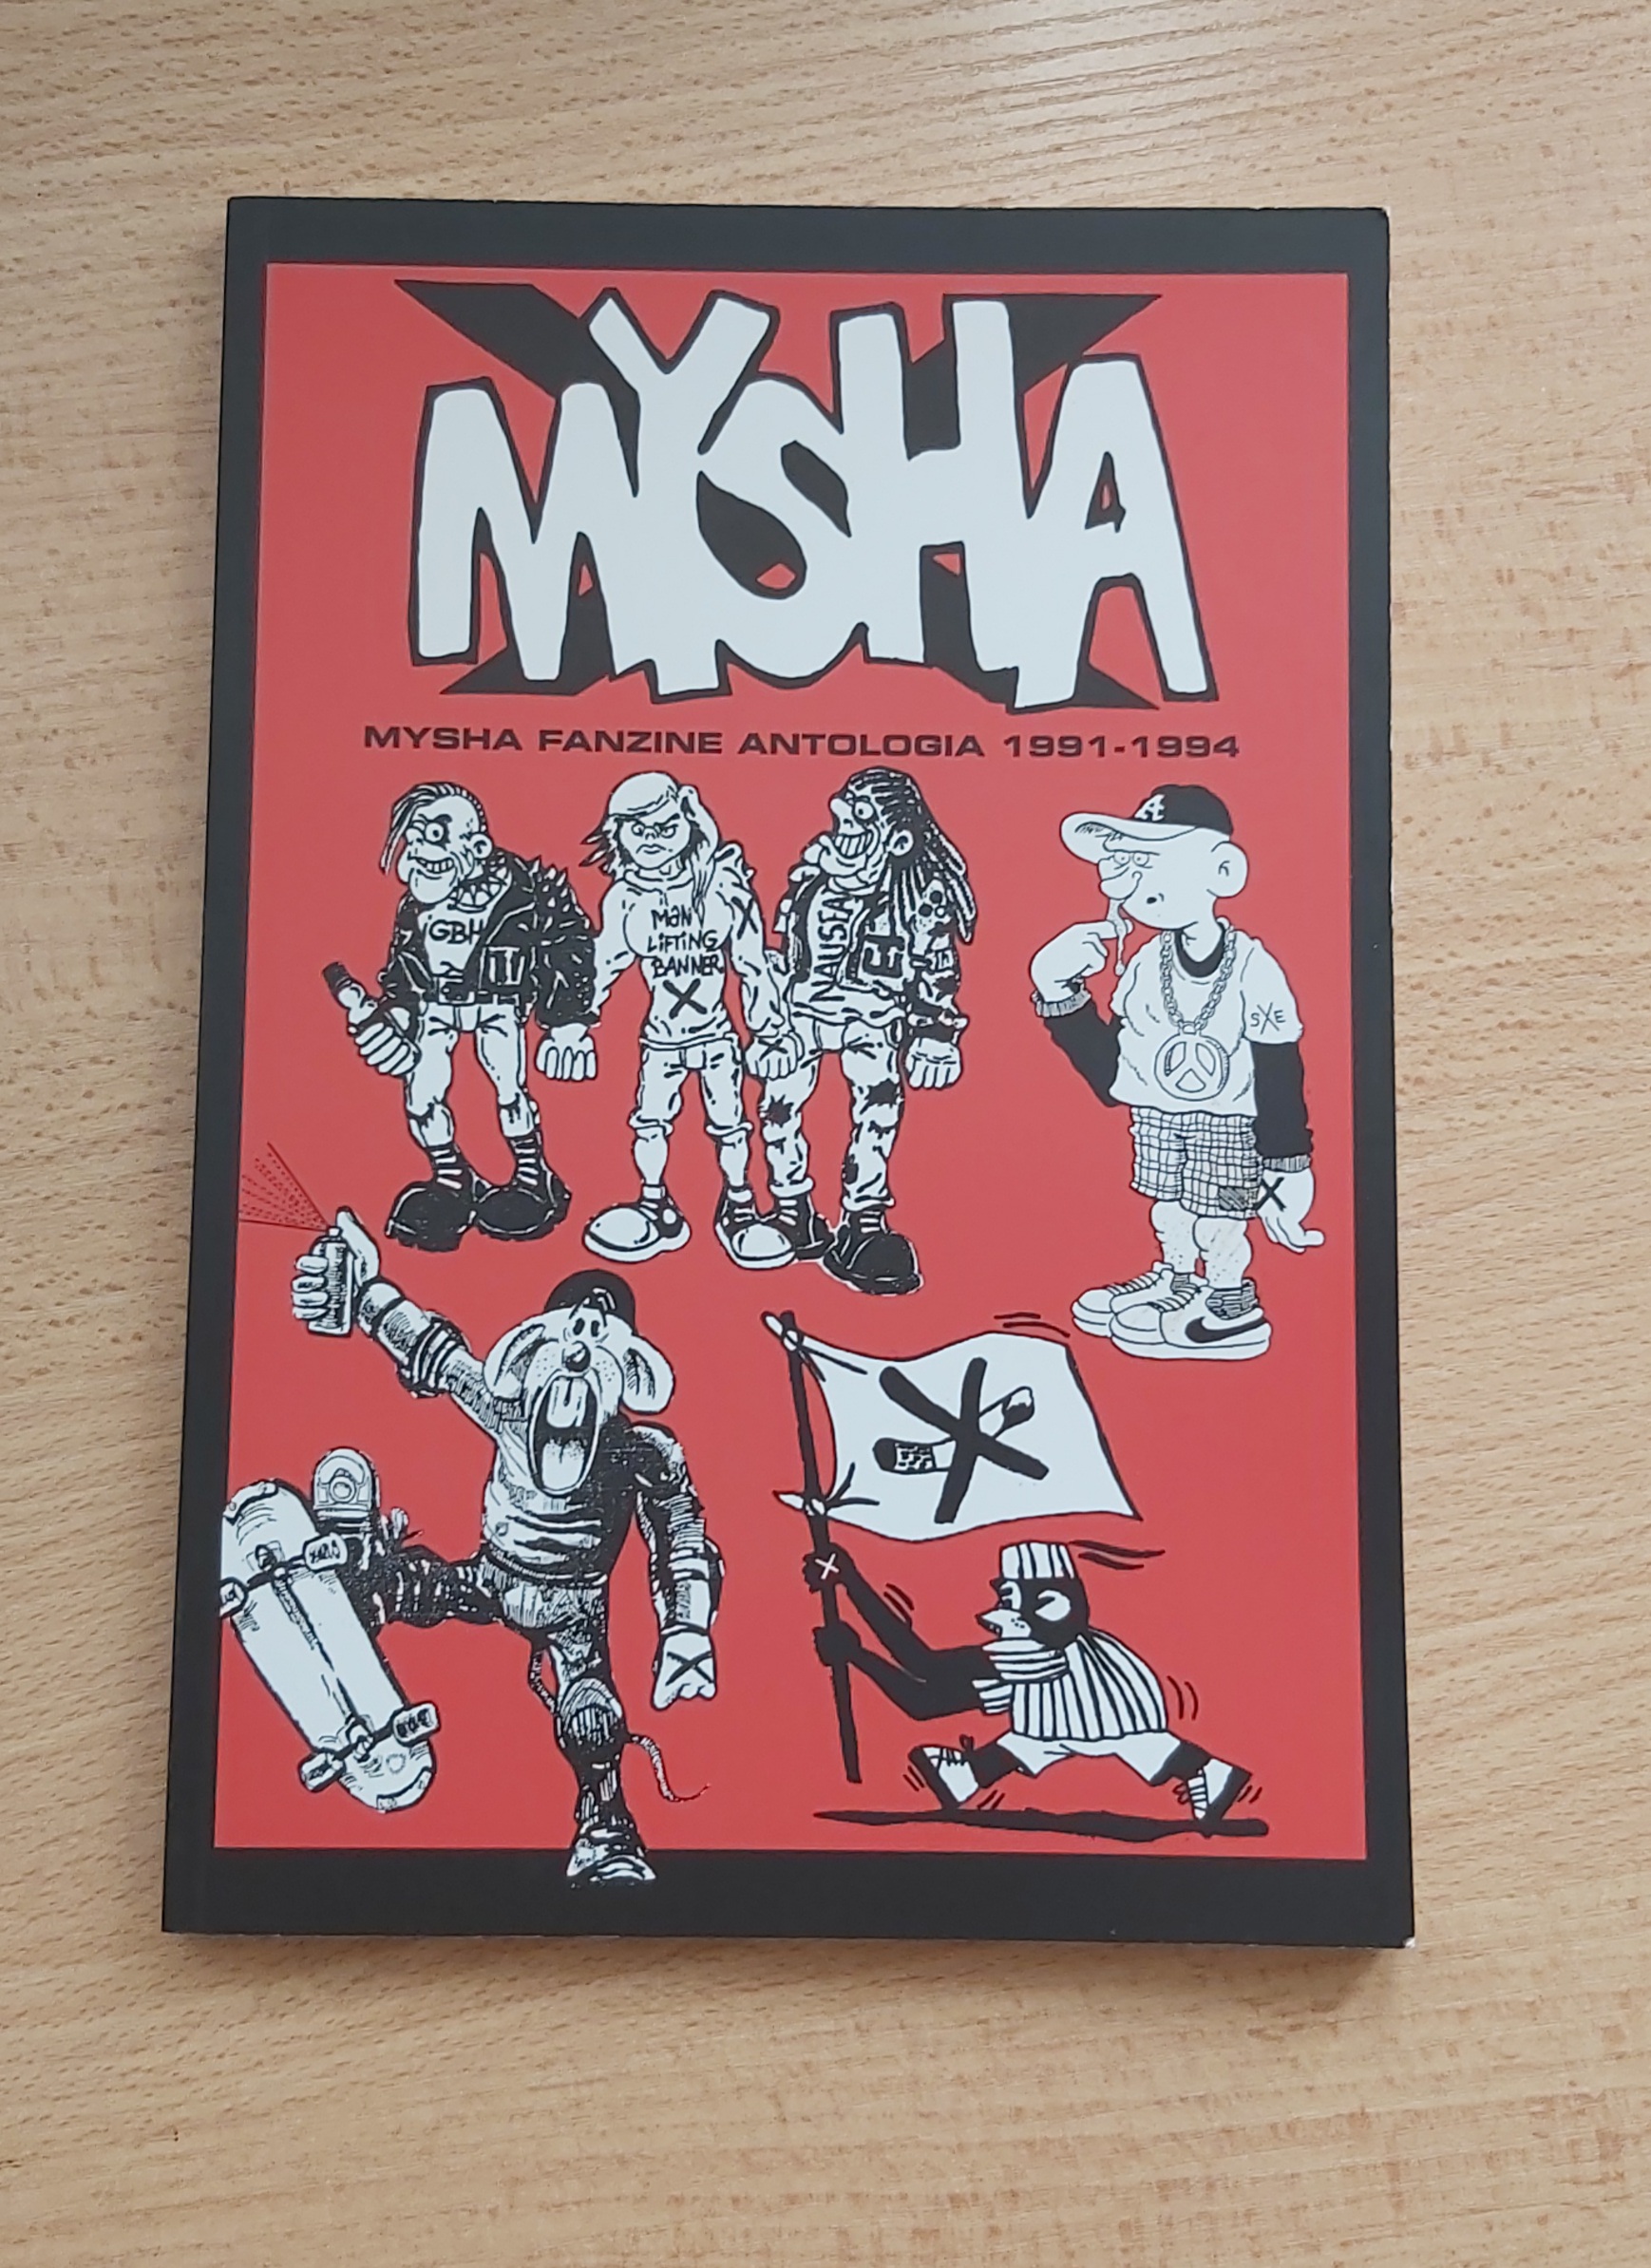 "Mysha fanzine antologia 1991 - 1994"